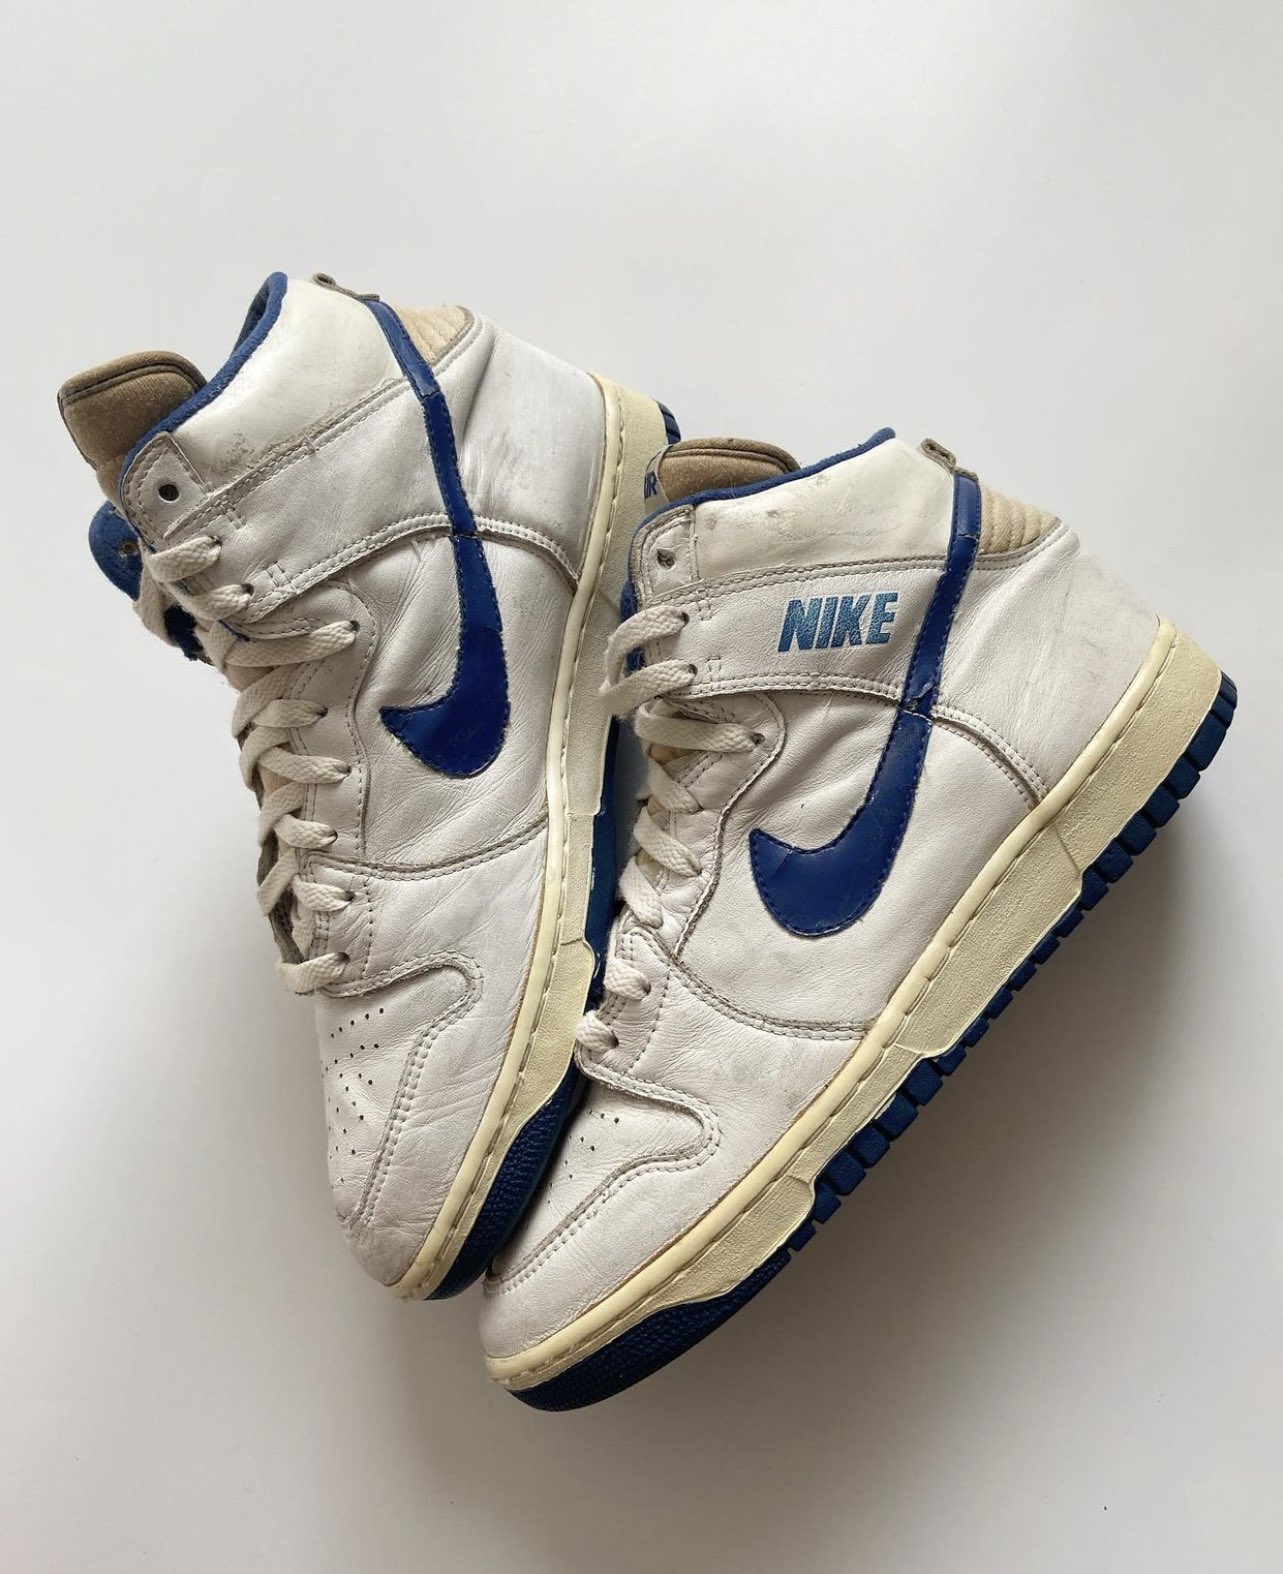 Nice Kicks on X: "Nike Air Pro Dunk (1987) 🔷 https://t.co/XMWnkrgGnj" / X